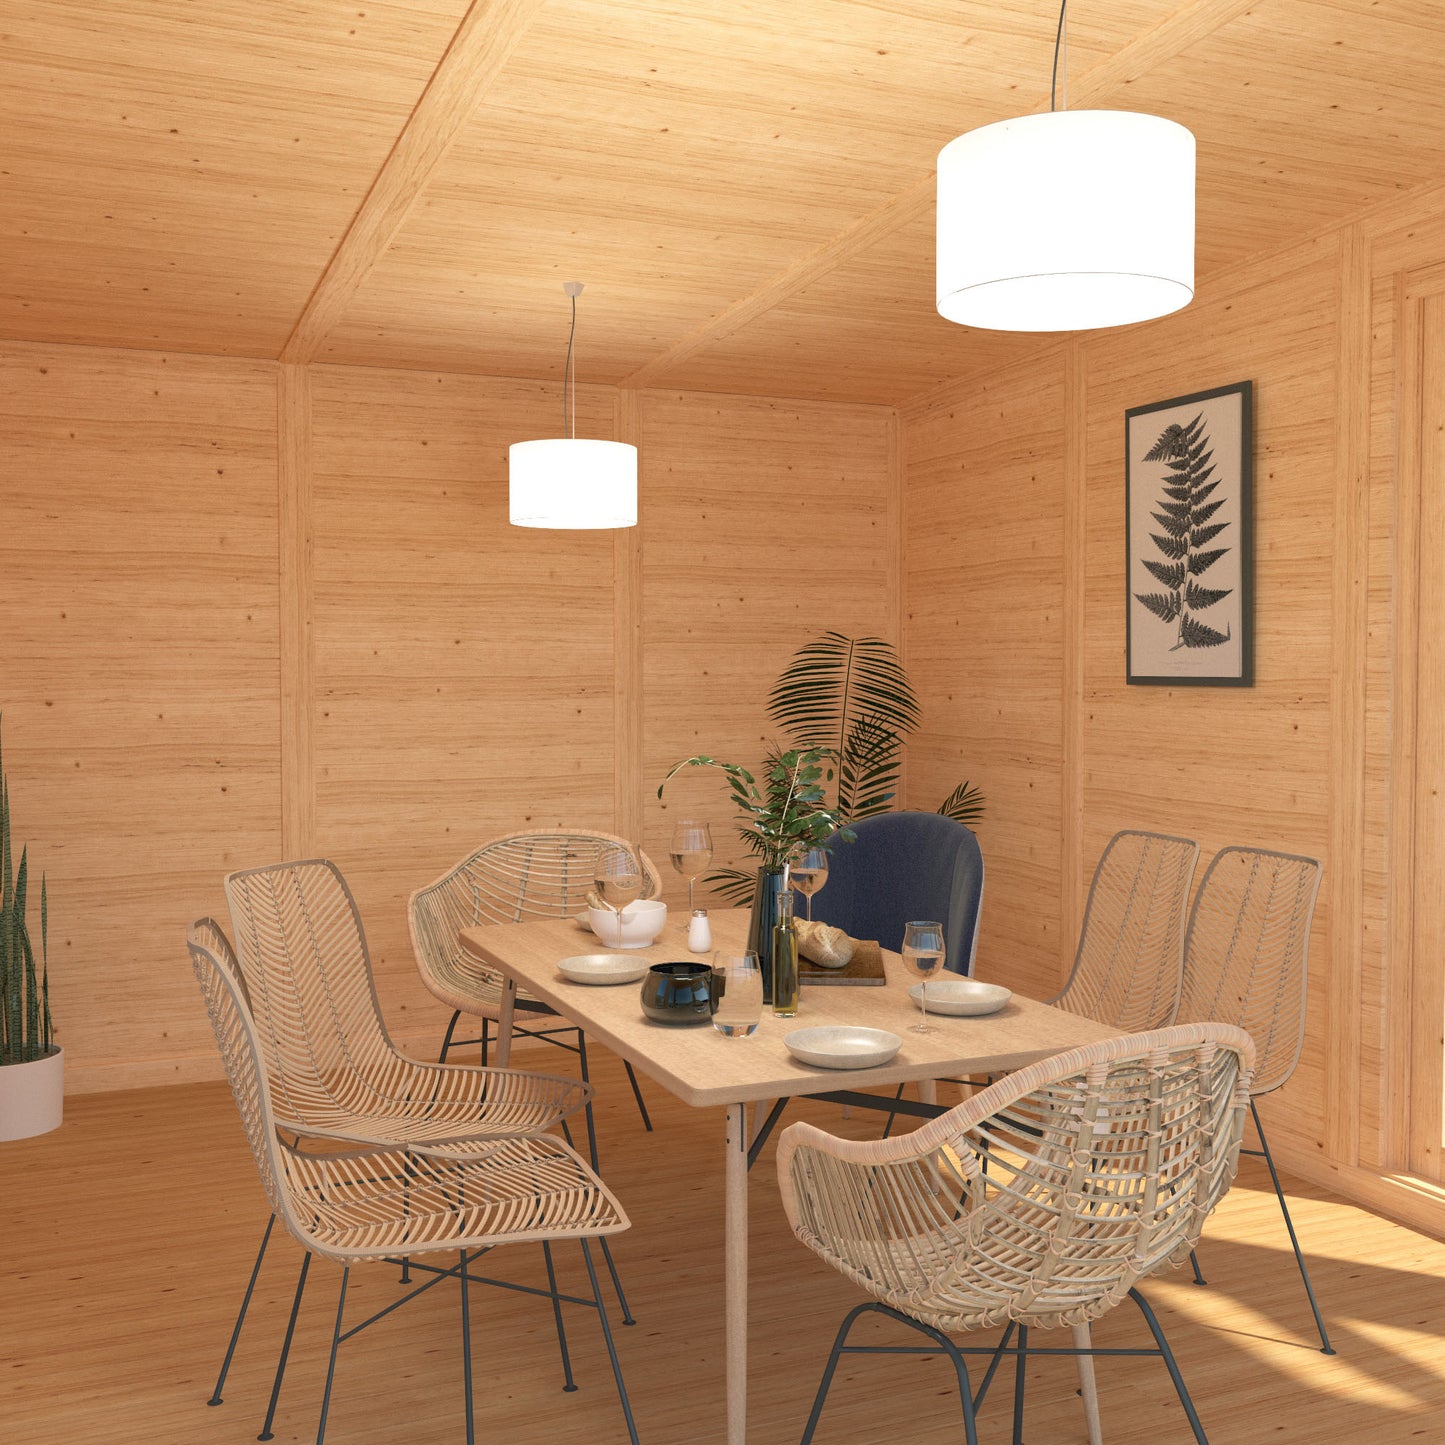 The Edwinstowe 4m x 4m Premium Insulated Garden Room